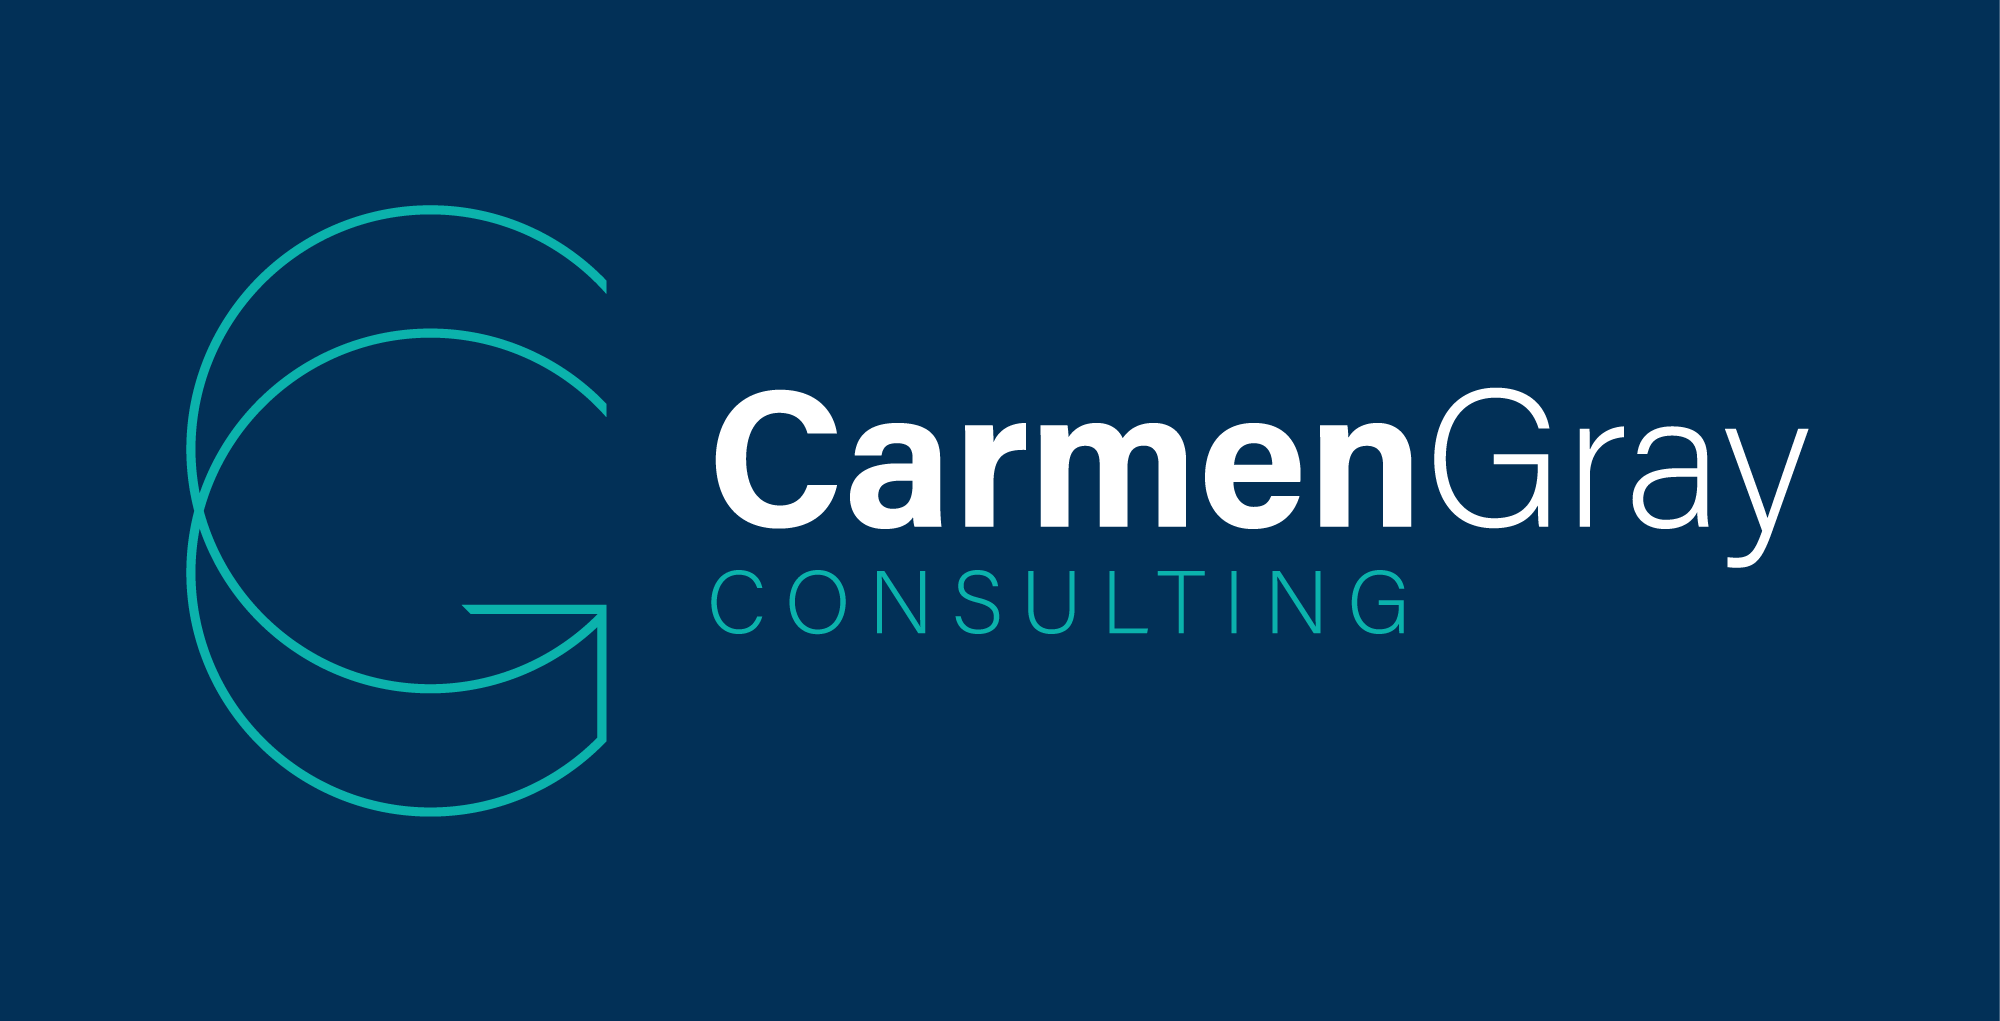 Carmen Gray Consulting